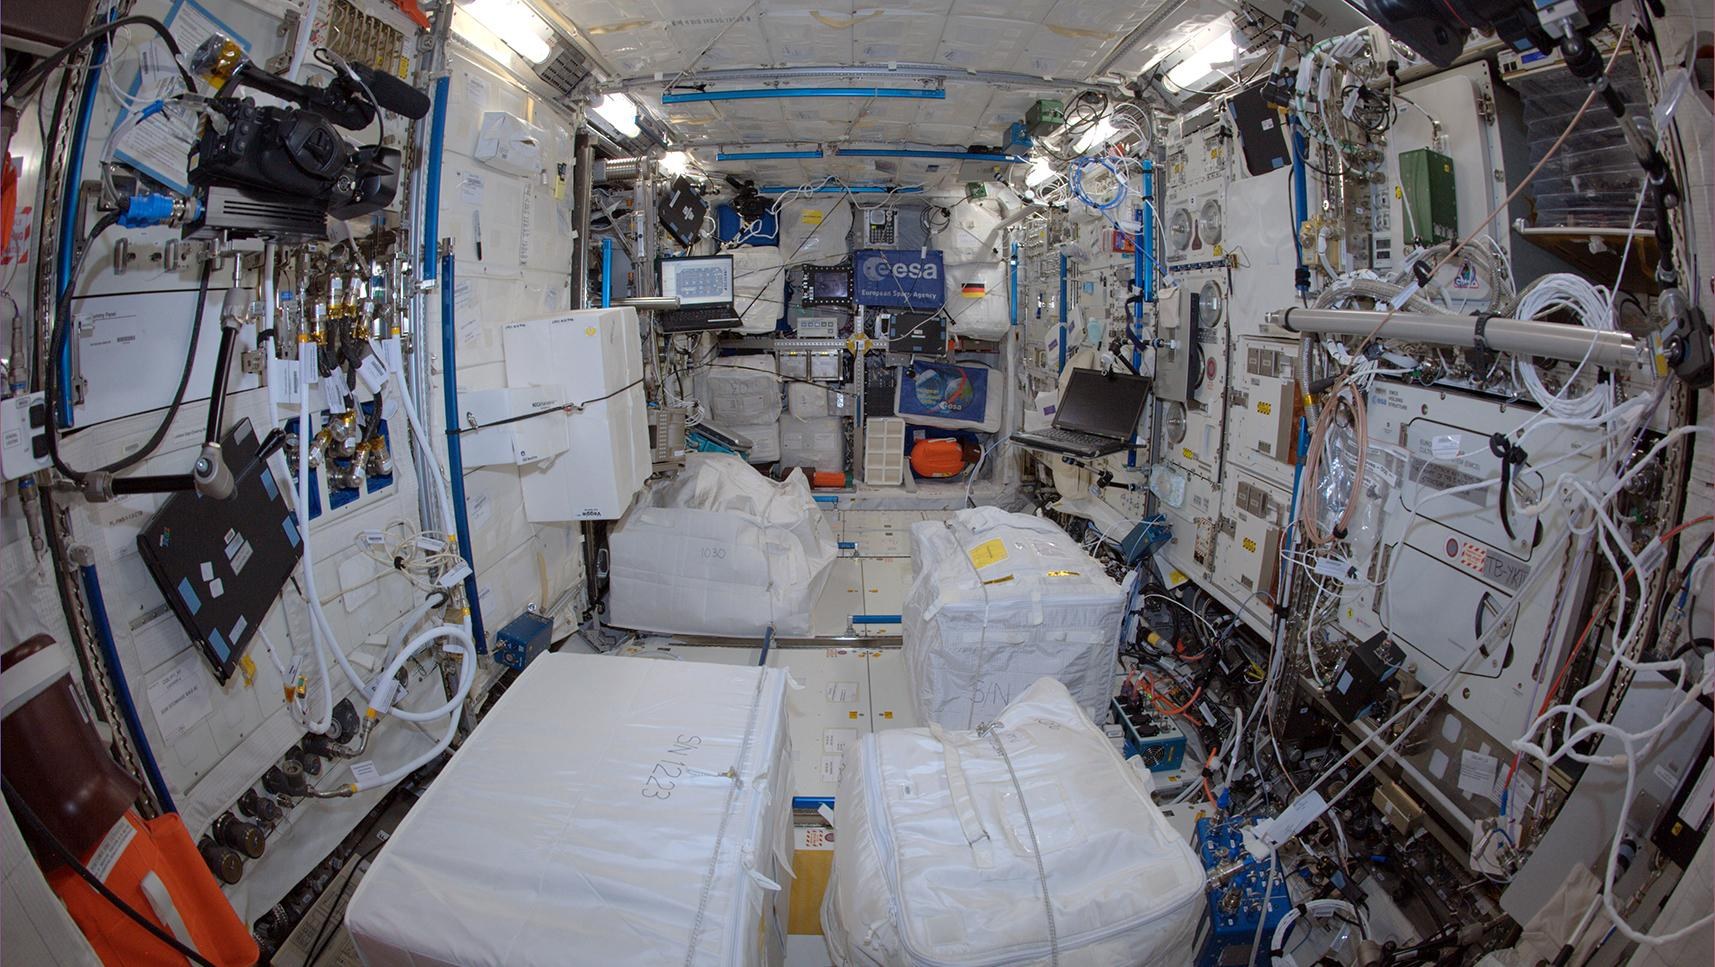 Blick ins Columbus-Labor der ISS